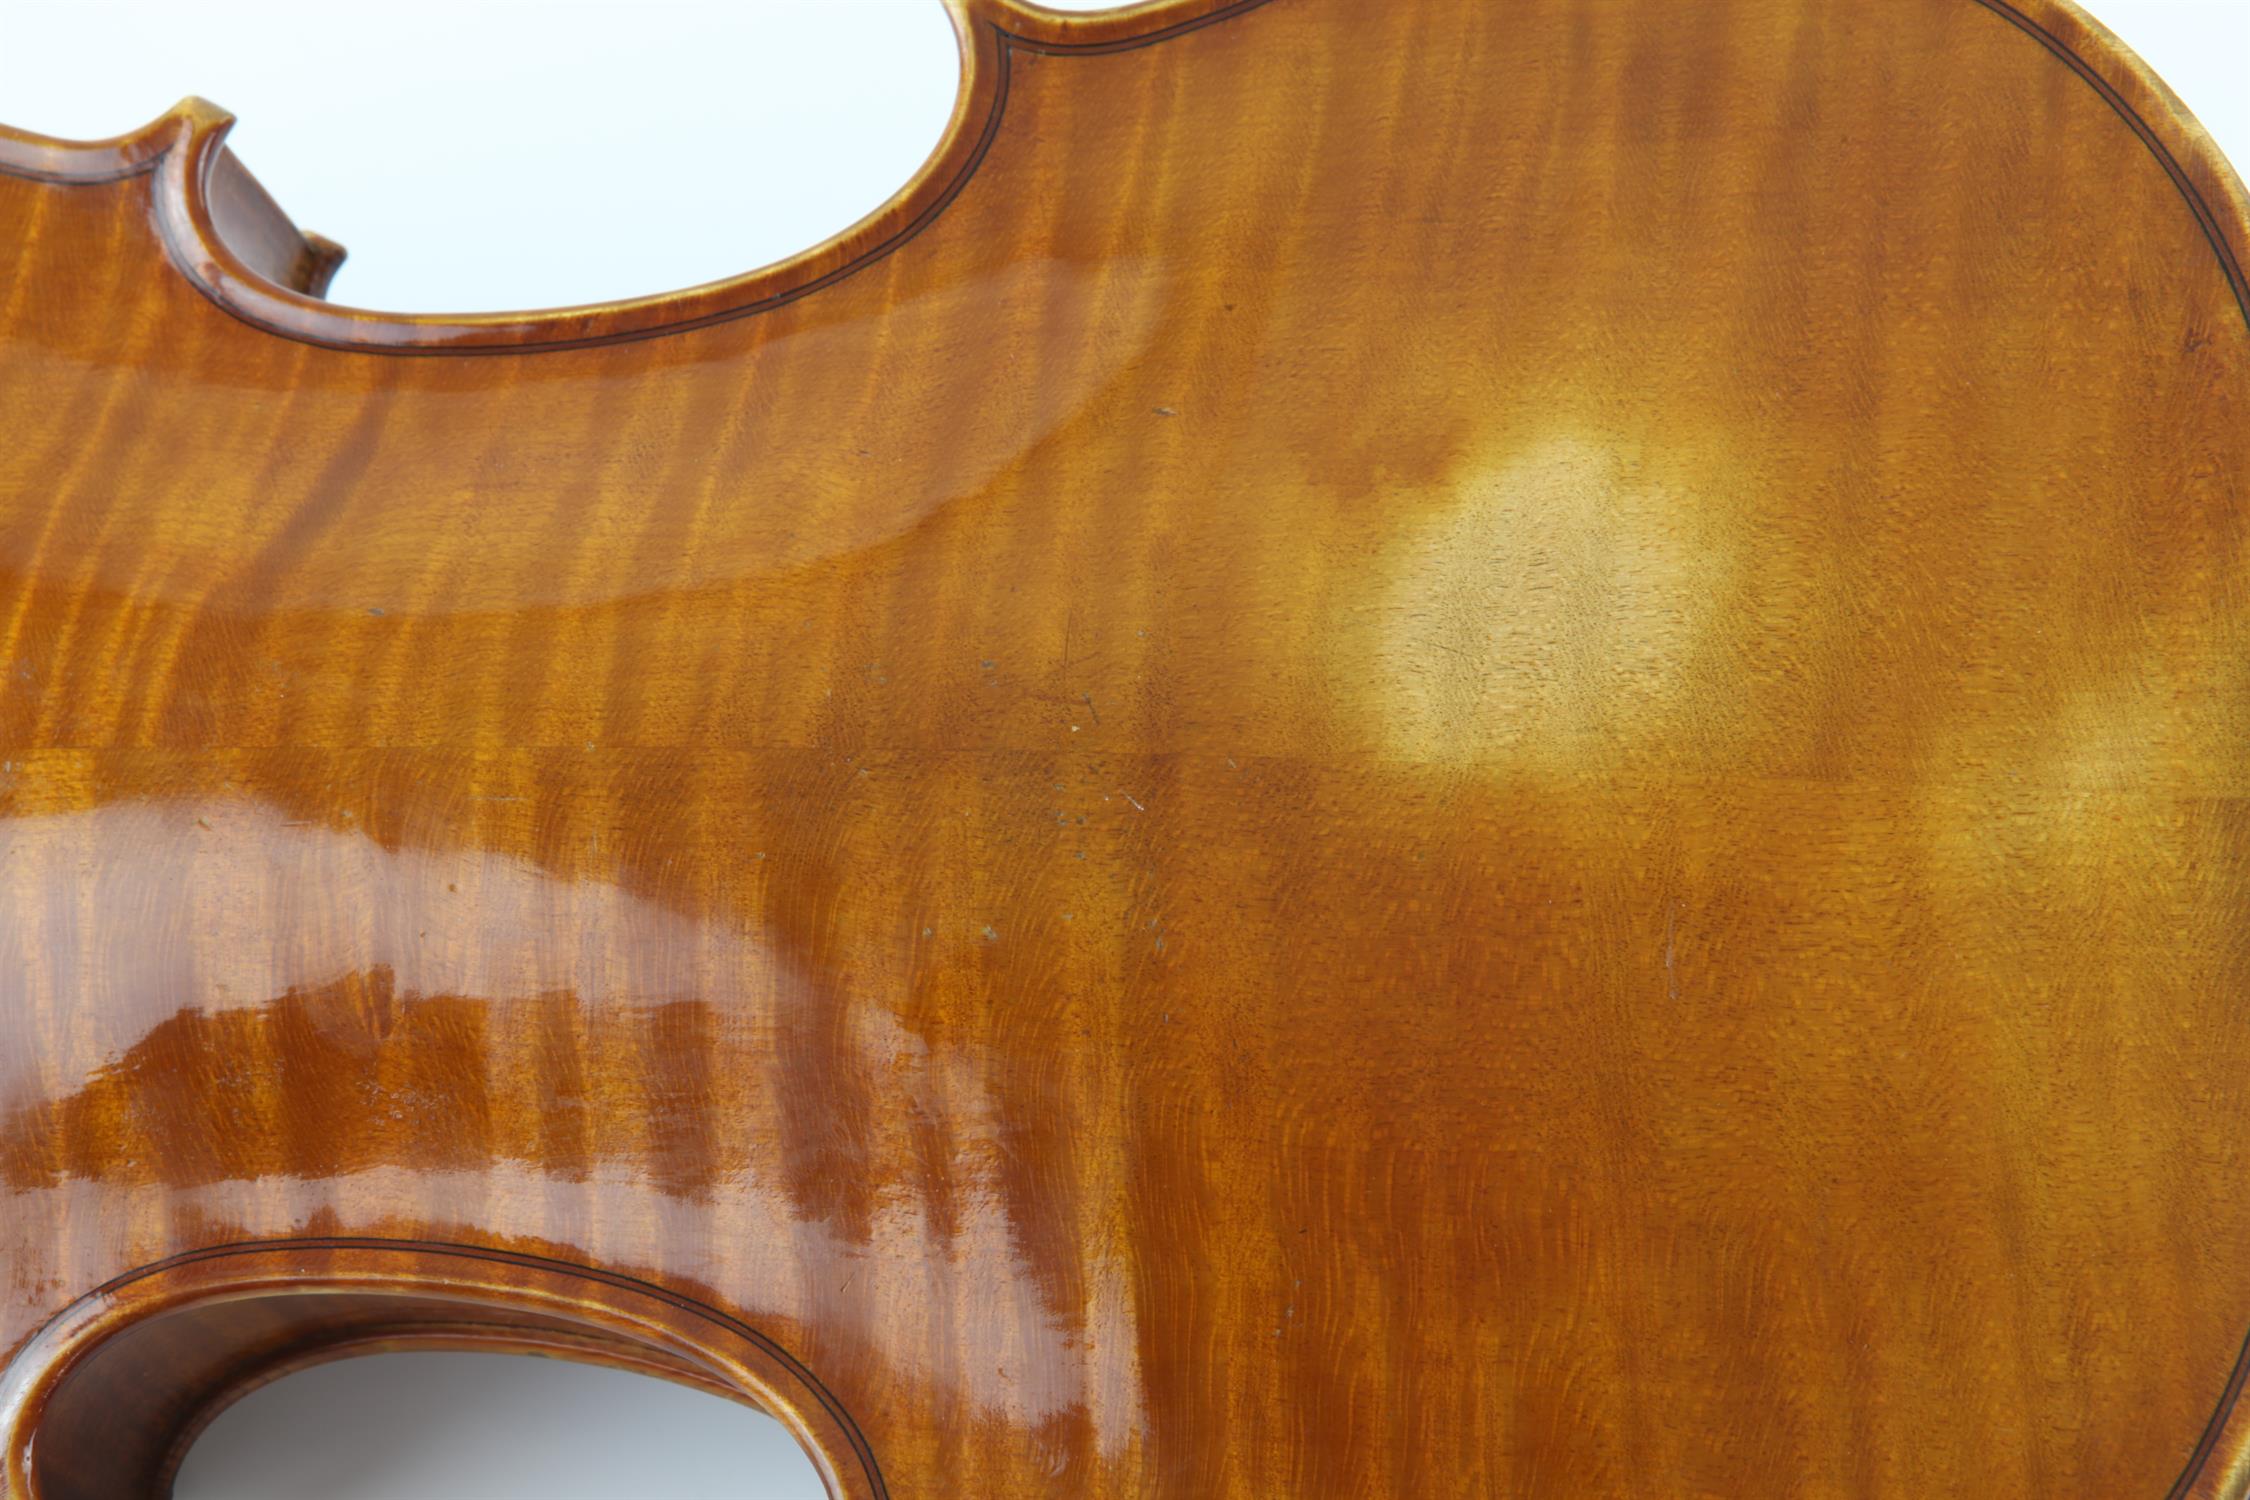 Carlo Giuseppe Oddone. A violin after Stradivari. Labelled Carlo Giuseppe Oddone fece. Torino A. - Image 37 of 39